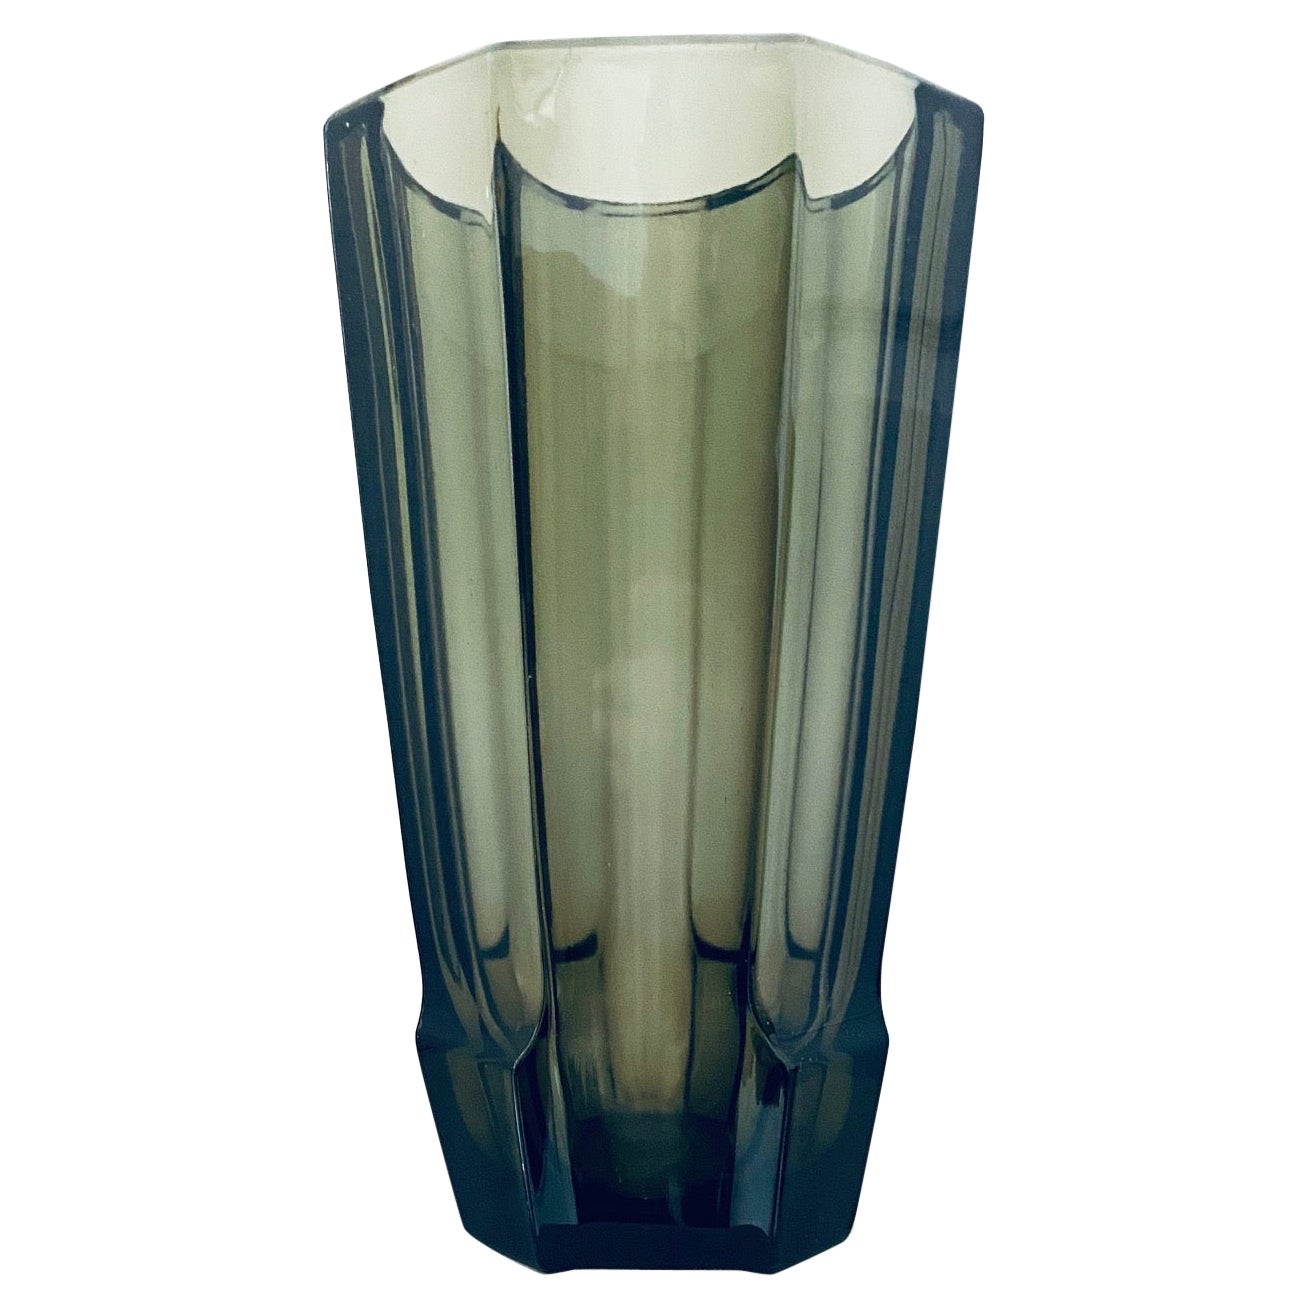 Art Deco Geometric Smoked Grey Glass Vase by Moser, Czech Republic, c. 1930's